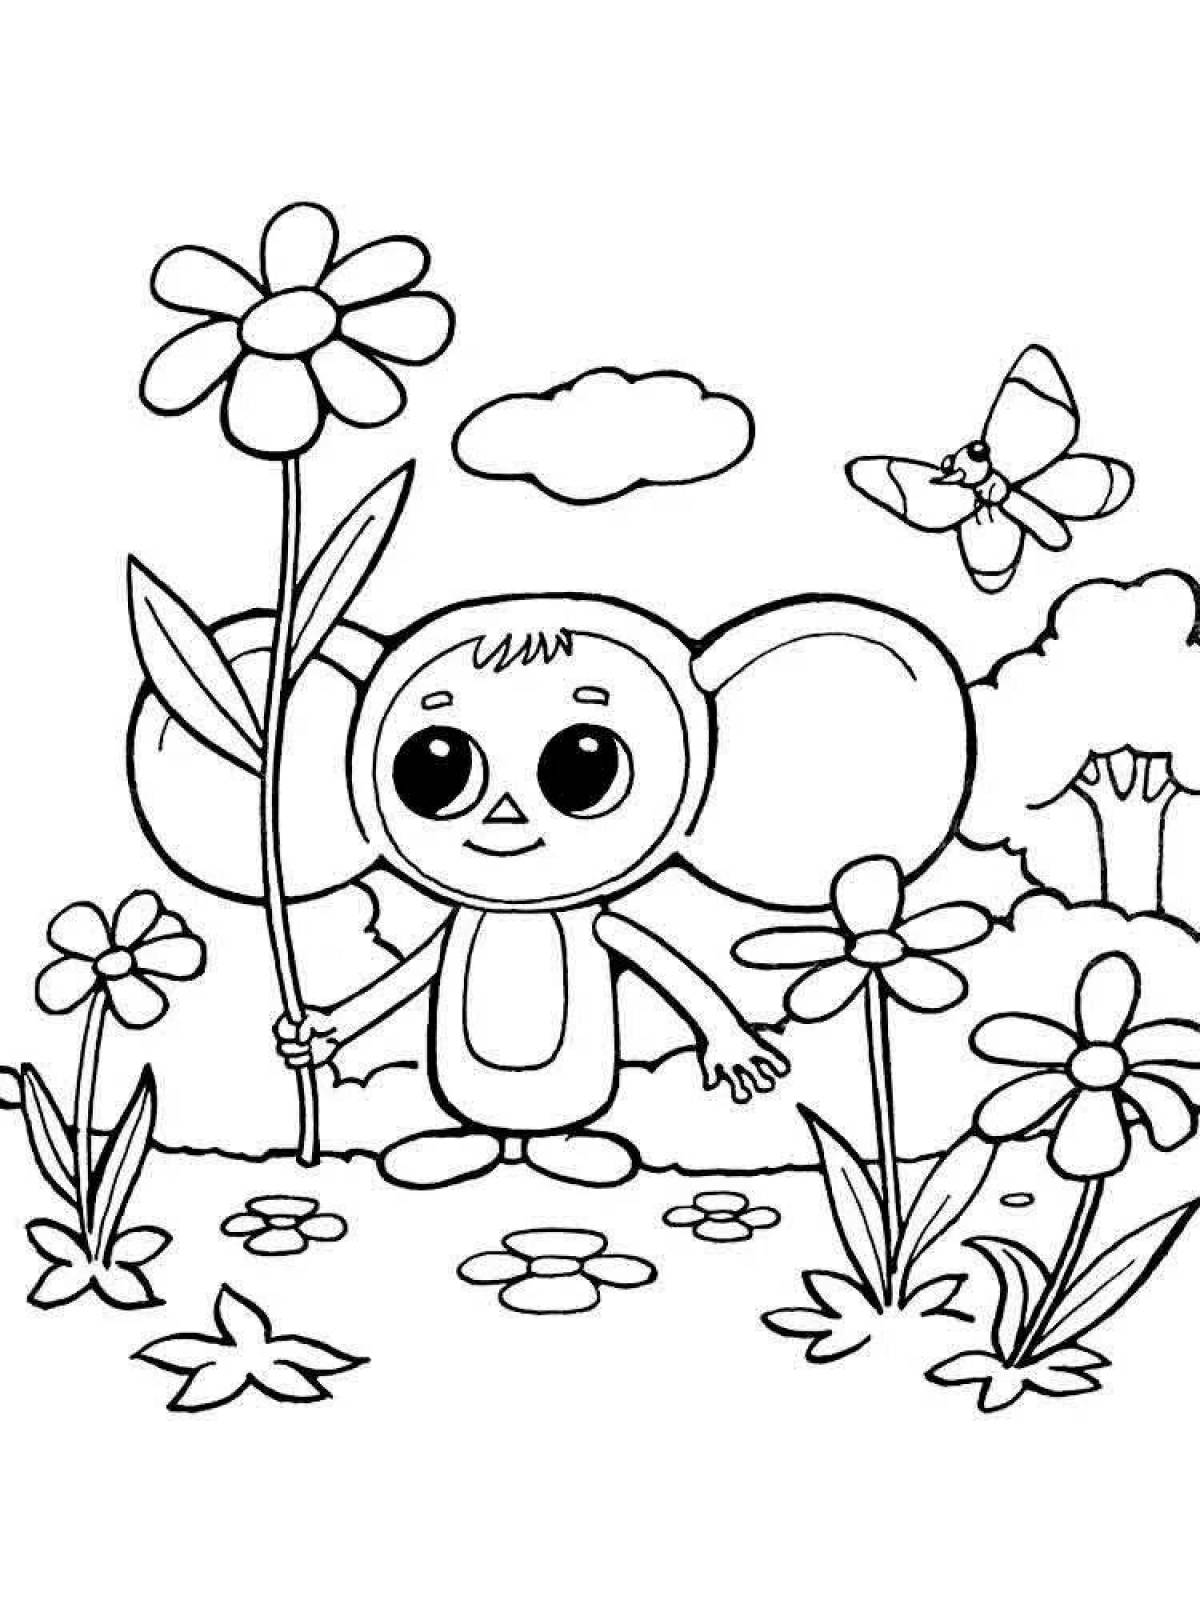 Inspirational drawing of cheburashka